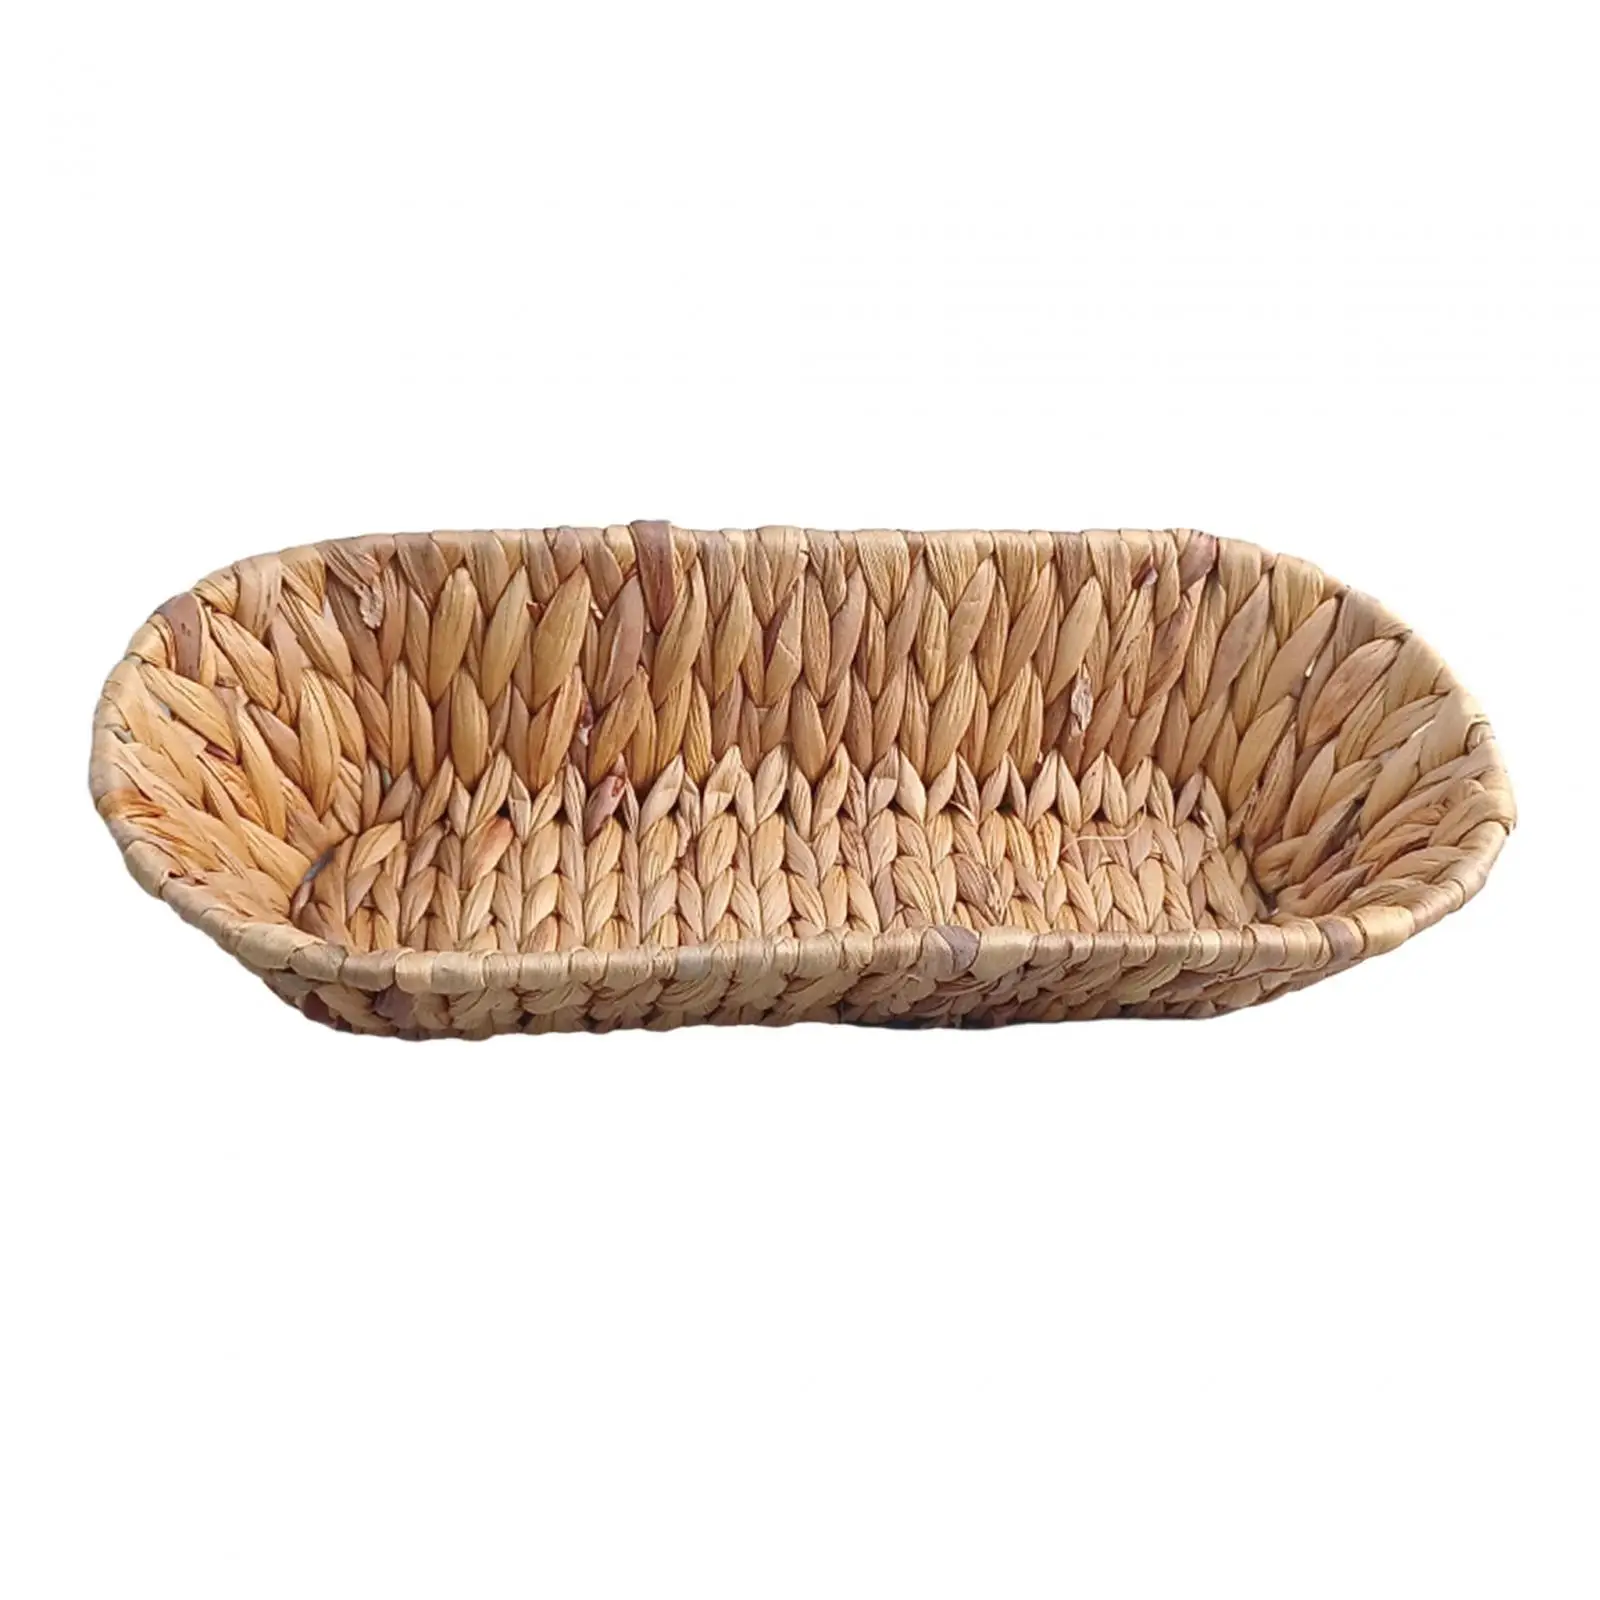 Handwoven Grass Rattan Bread Basket Serving Organizer Multipurpose Pastoral Style 32x13x7cm for Keys Wallet Phone Durable